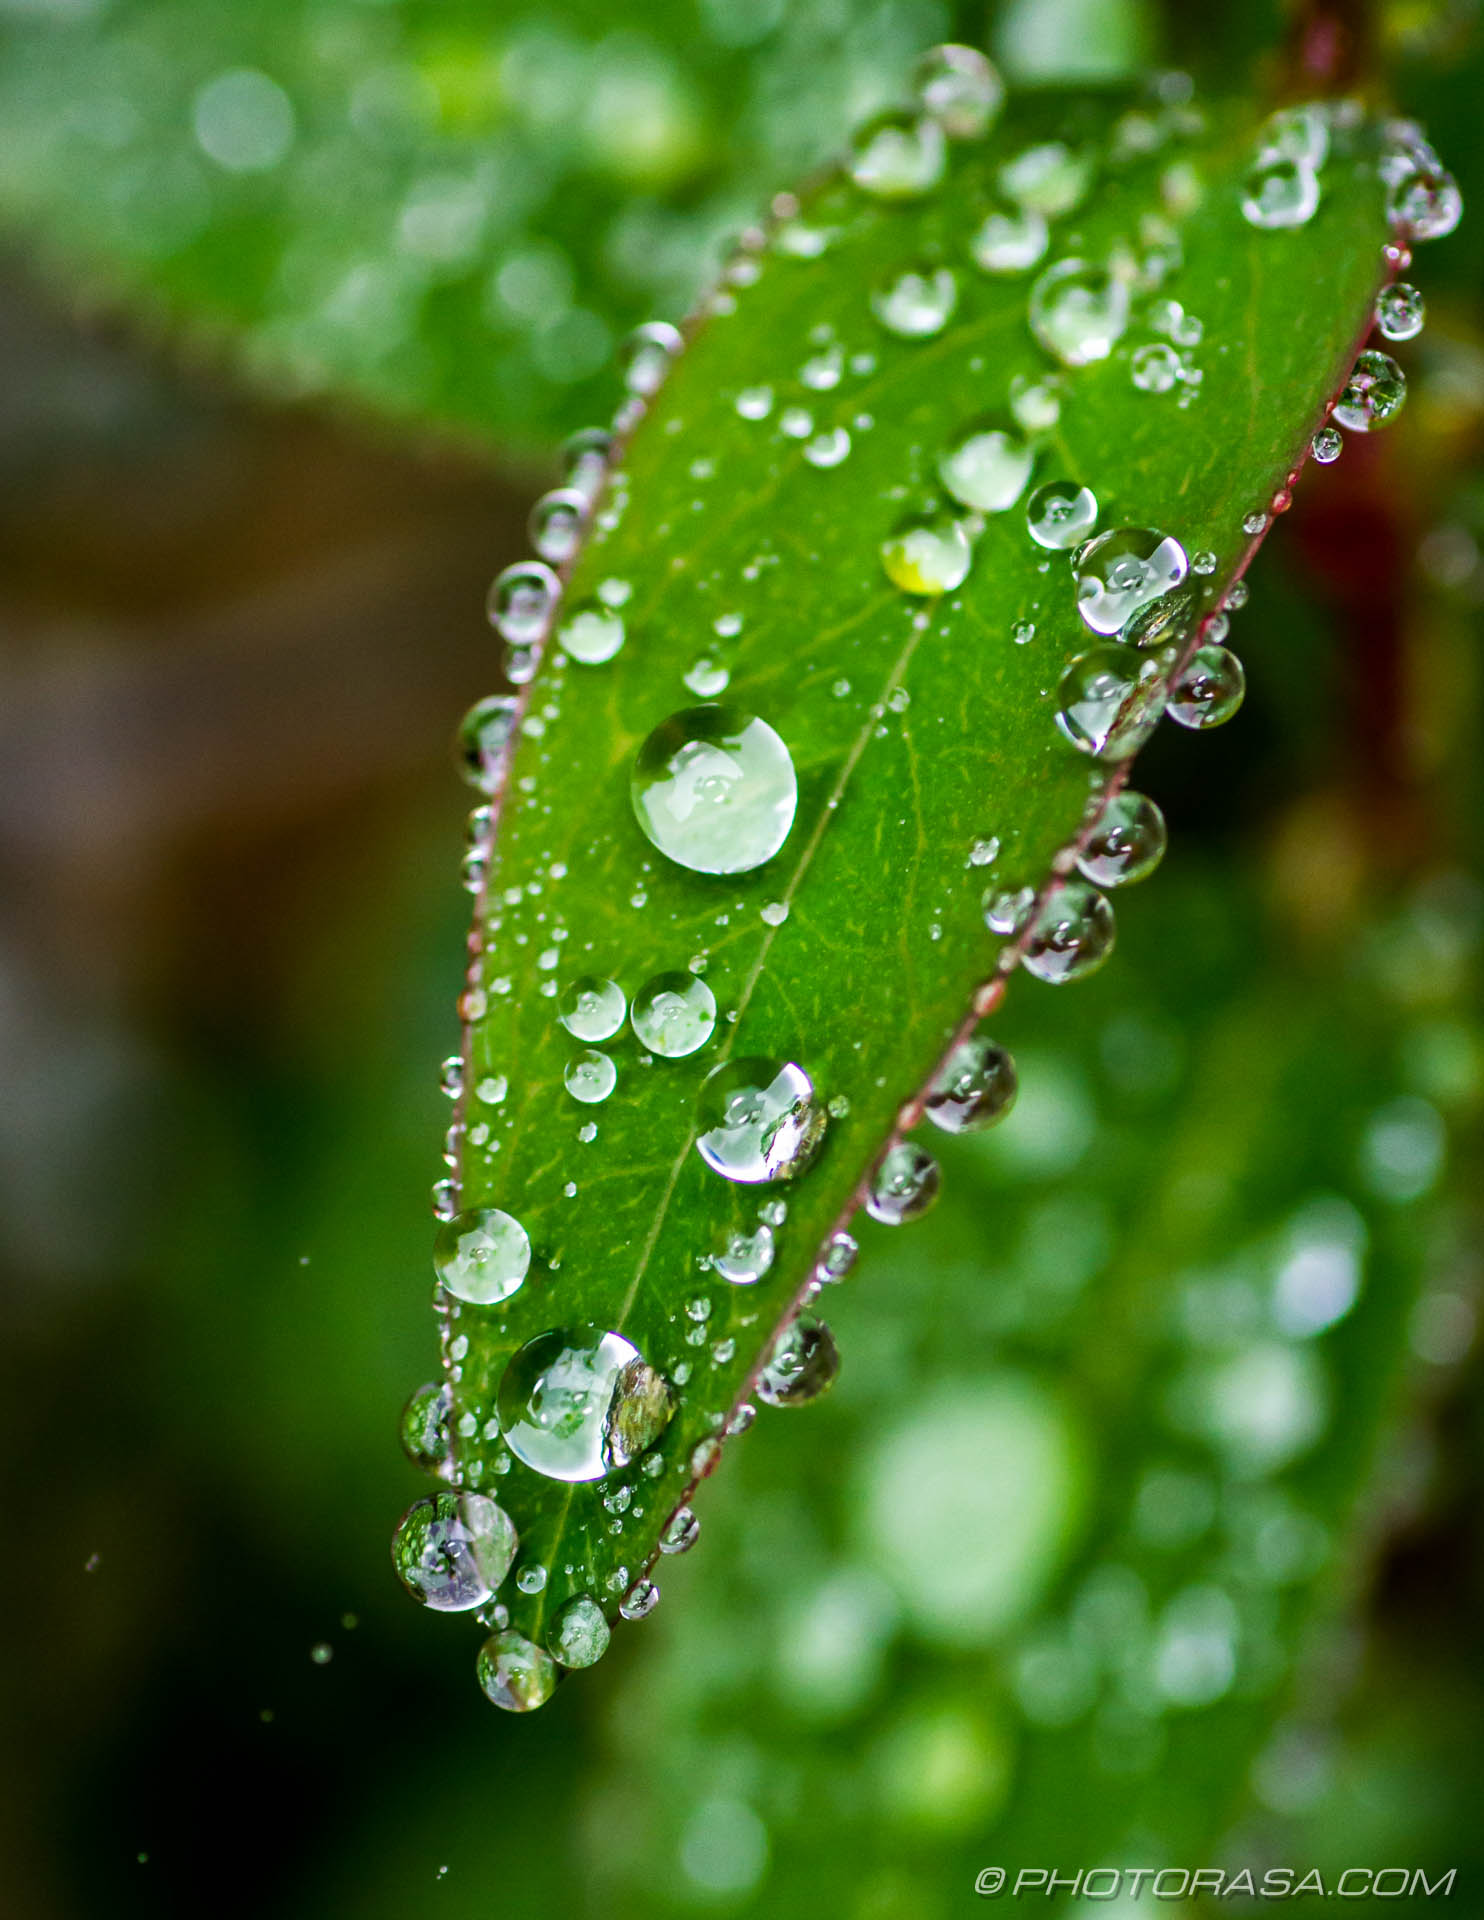 tiny water droplets on small leaf - Photorasa Free HD Photos